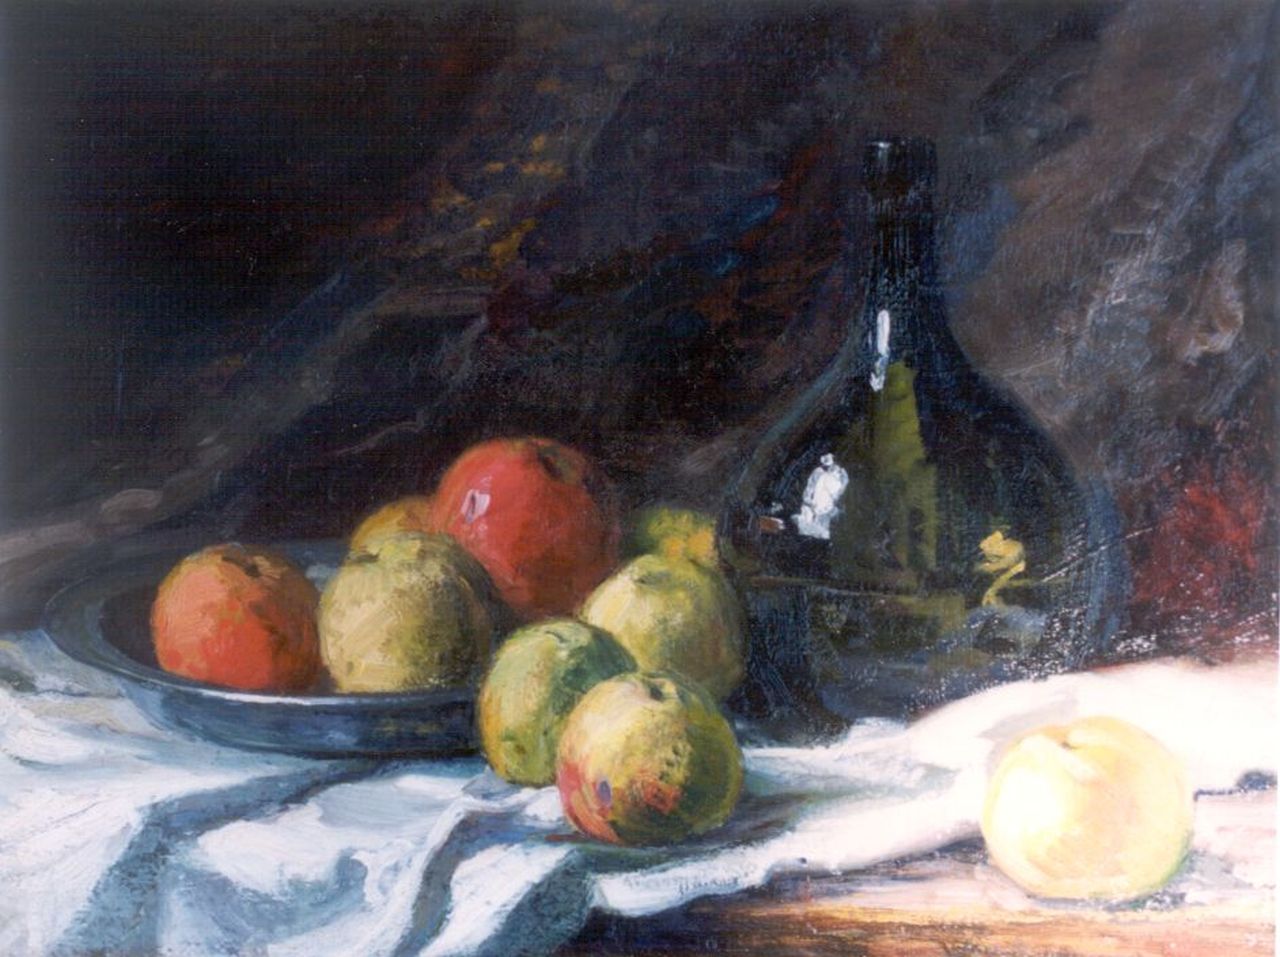 Hemelman A.  | Albert Hemelman, A still life with apples and a bottle, oil on canvas 47.0 x 62.0 cm, signed l.r.